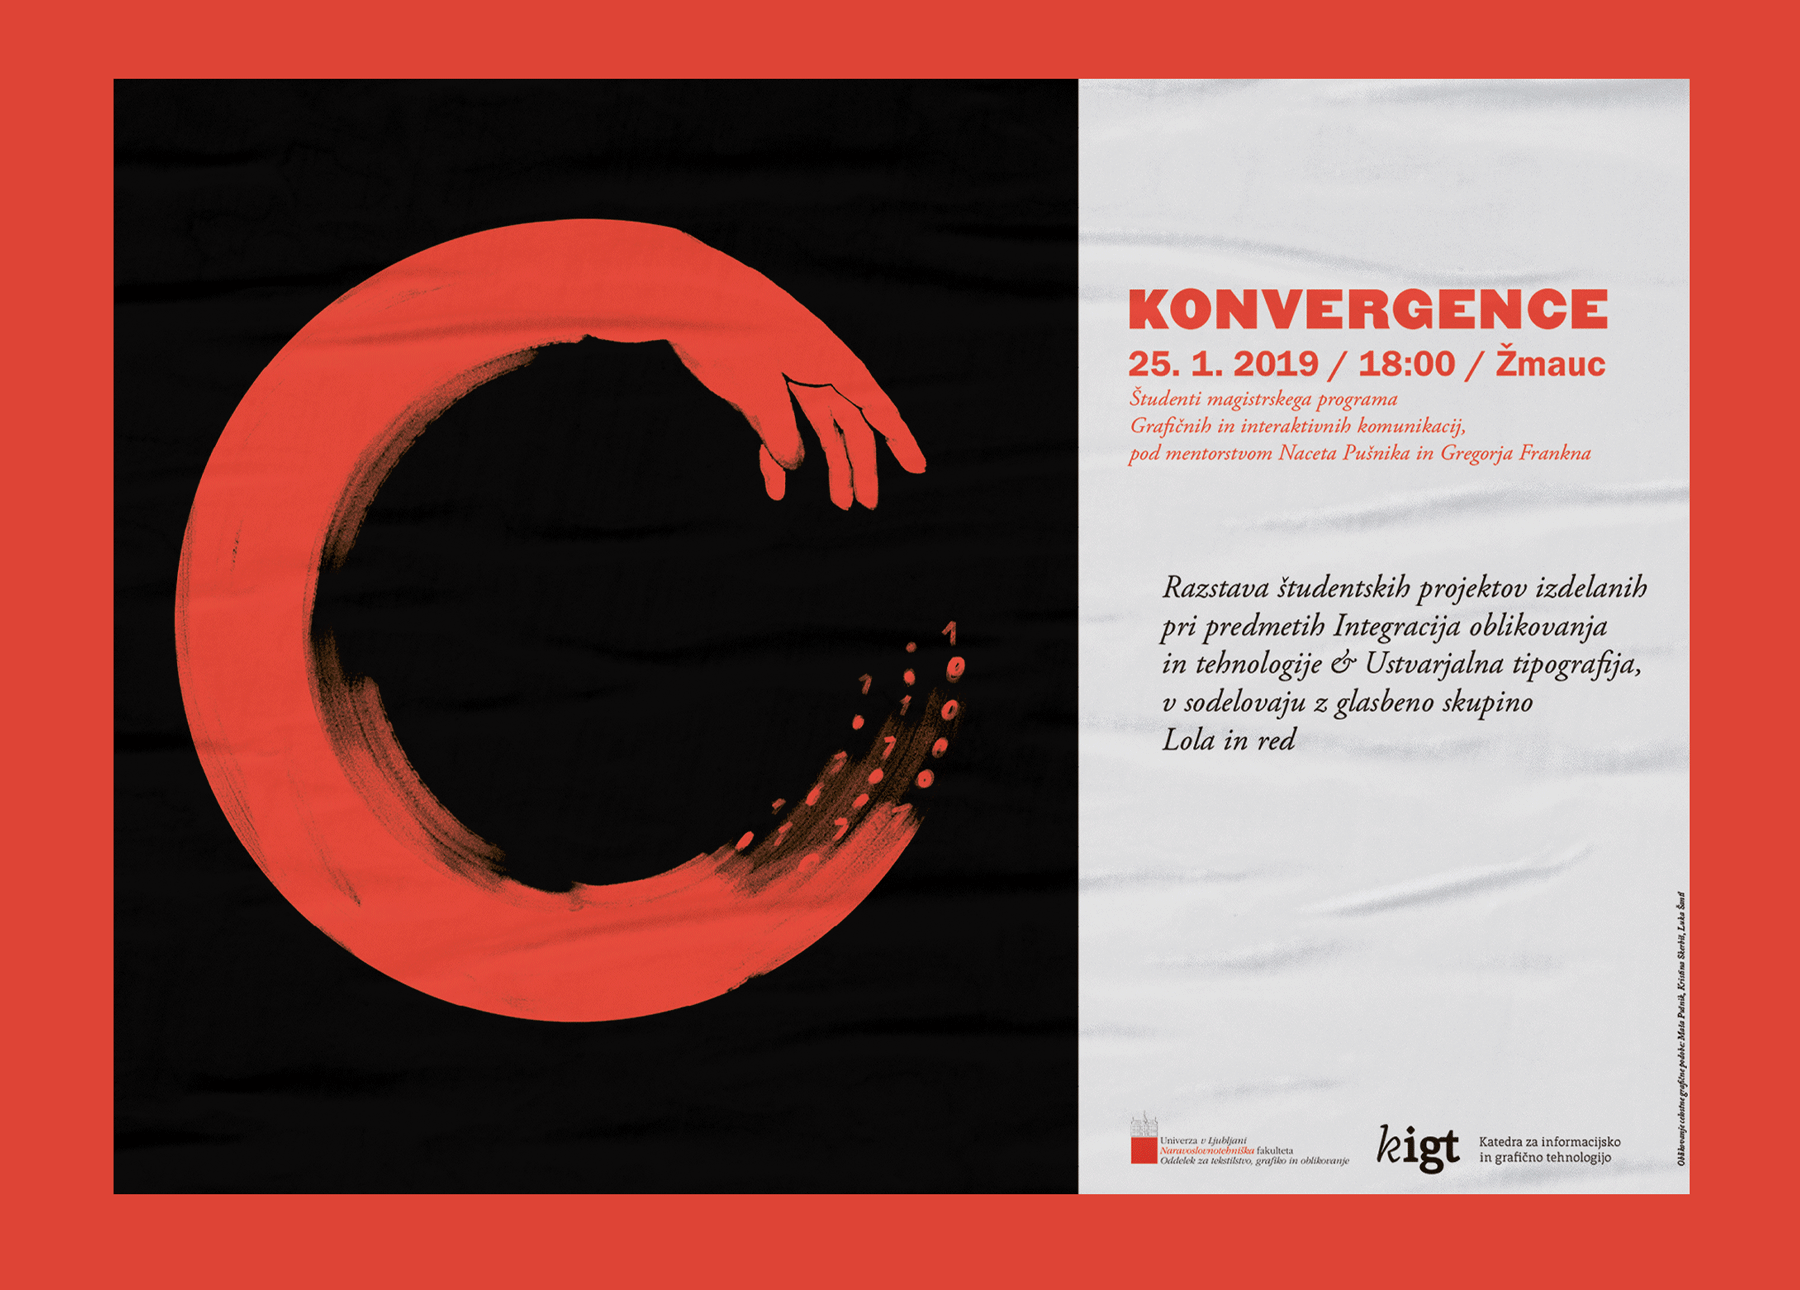 Konvergence poster